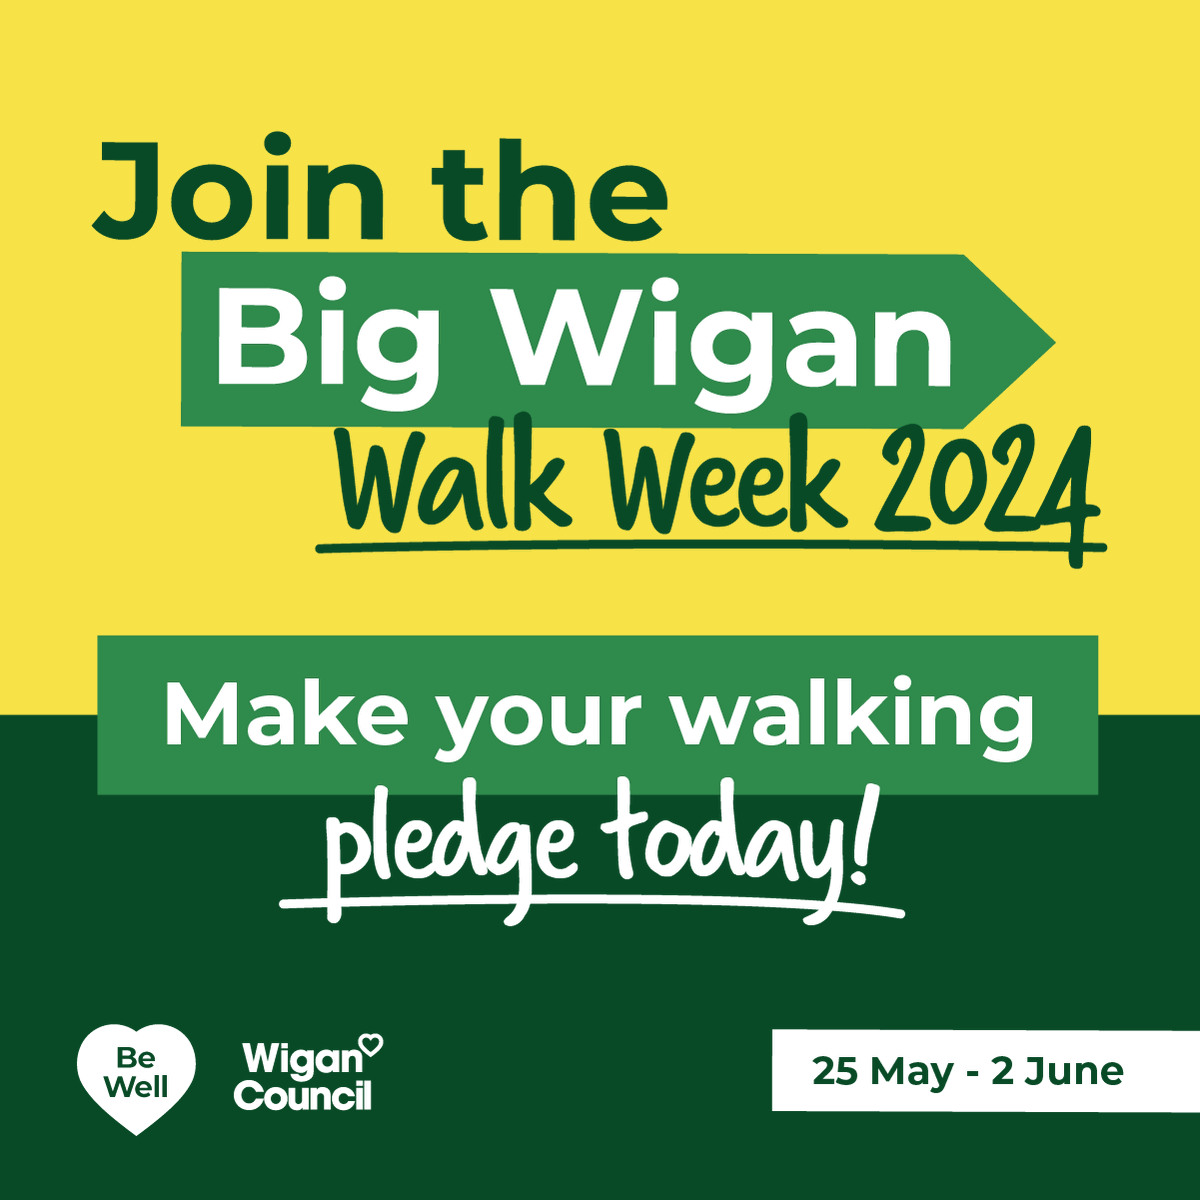 Coming soon... the Big Wigan Walk Week 2024! 🚶‍♂️🚶‍♀️💚 More than 40 organised walks from 25 May - 2 June including nature strolls, Nordic walking, heritage trails & more! Make your walking pledge today at bewellwigan.org/bigwiganwalkwe… @GmWalks @WalkRideGM @GMMoving @GmRingway @GM_Active